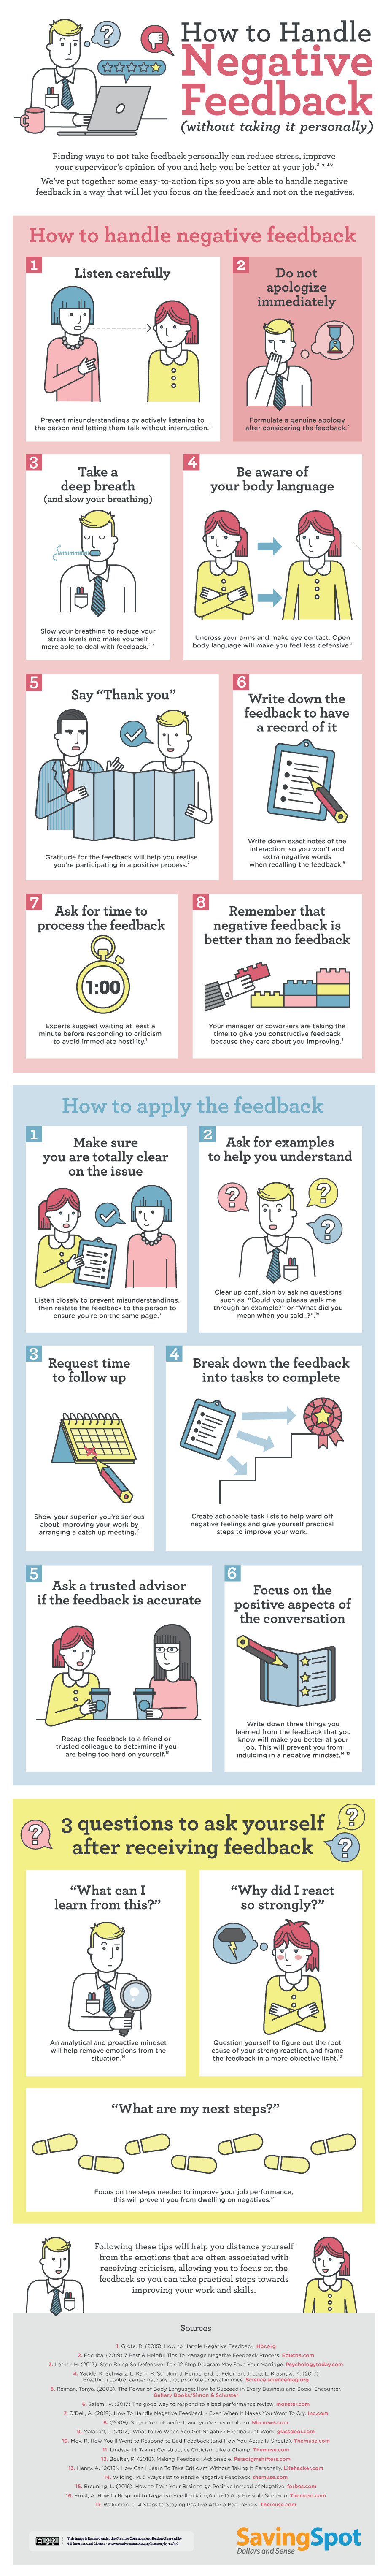 Top tips for handling negative feedback